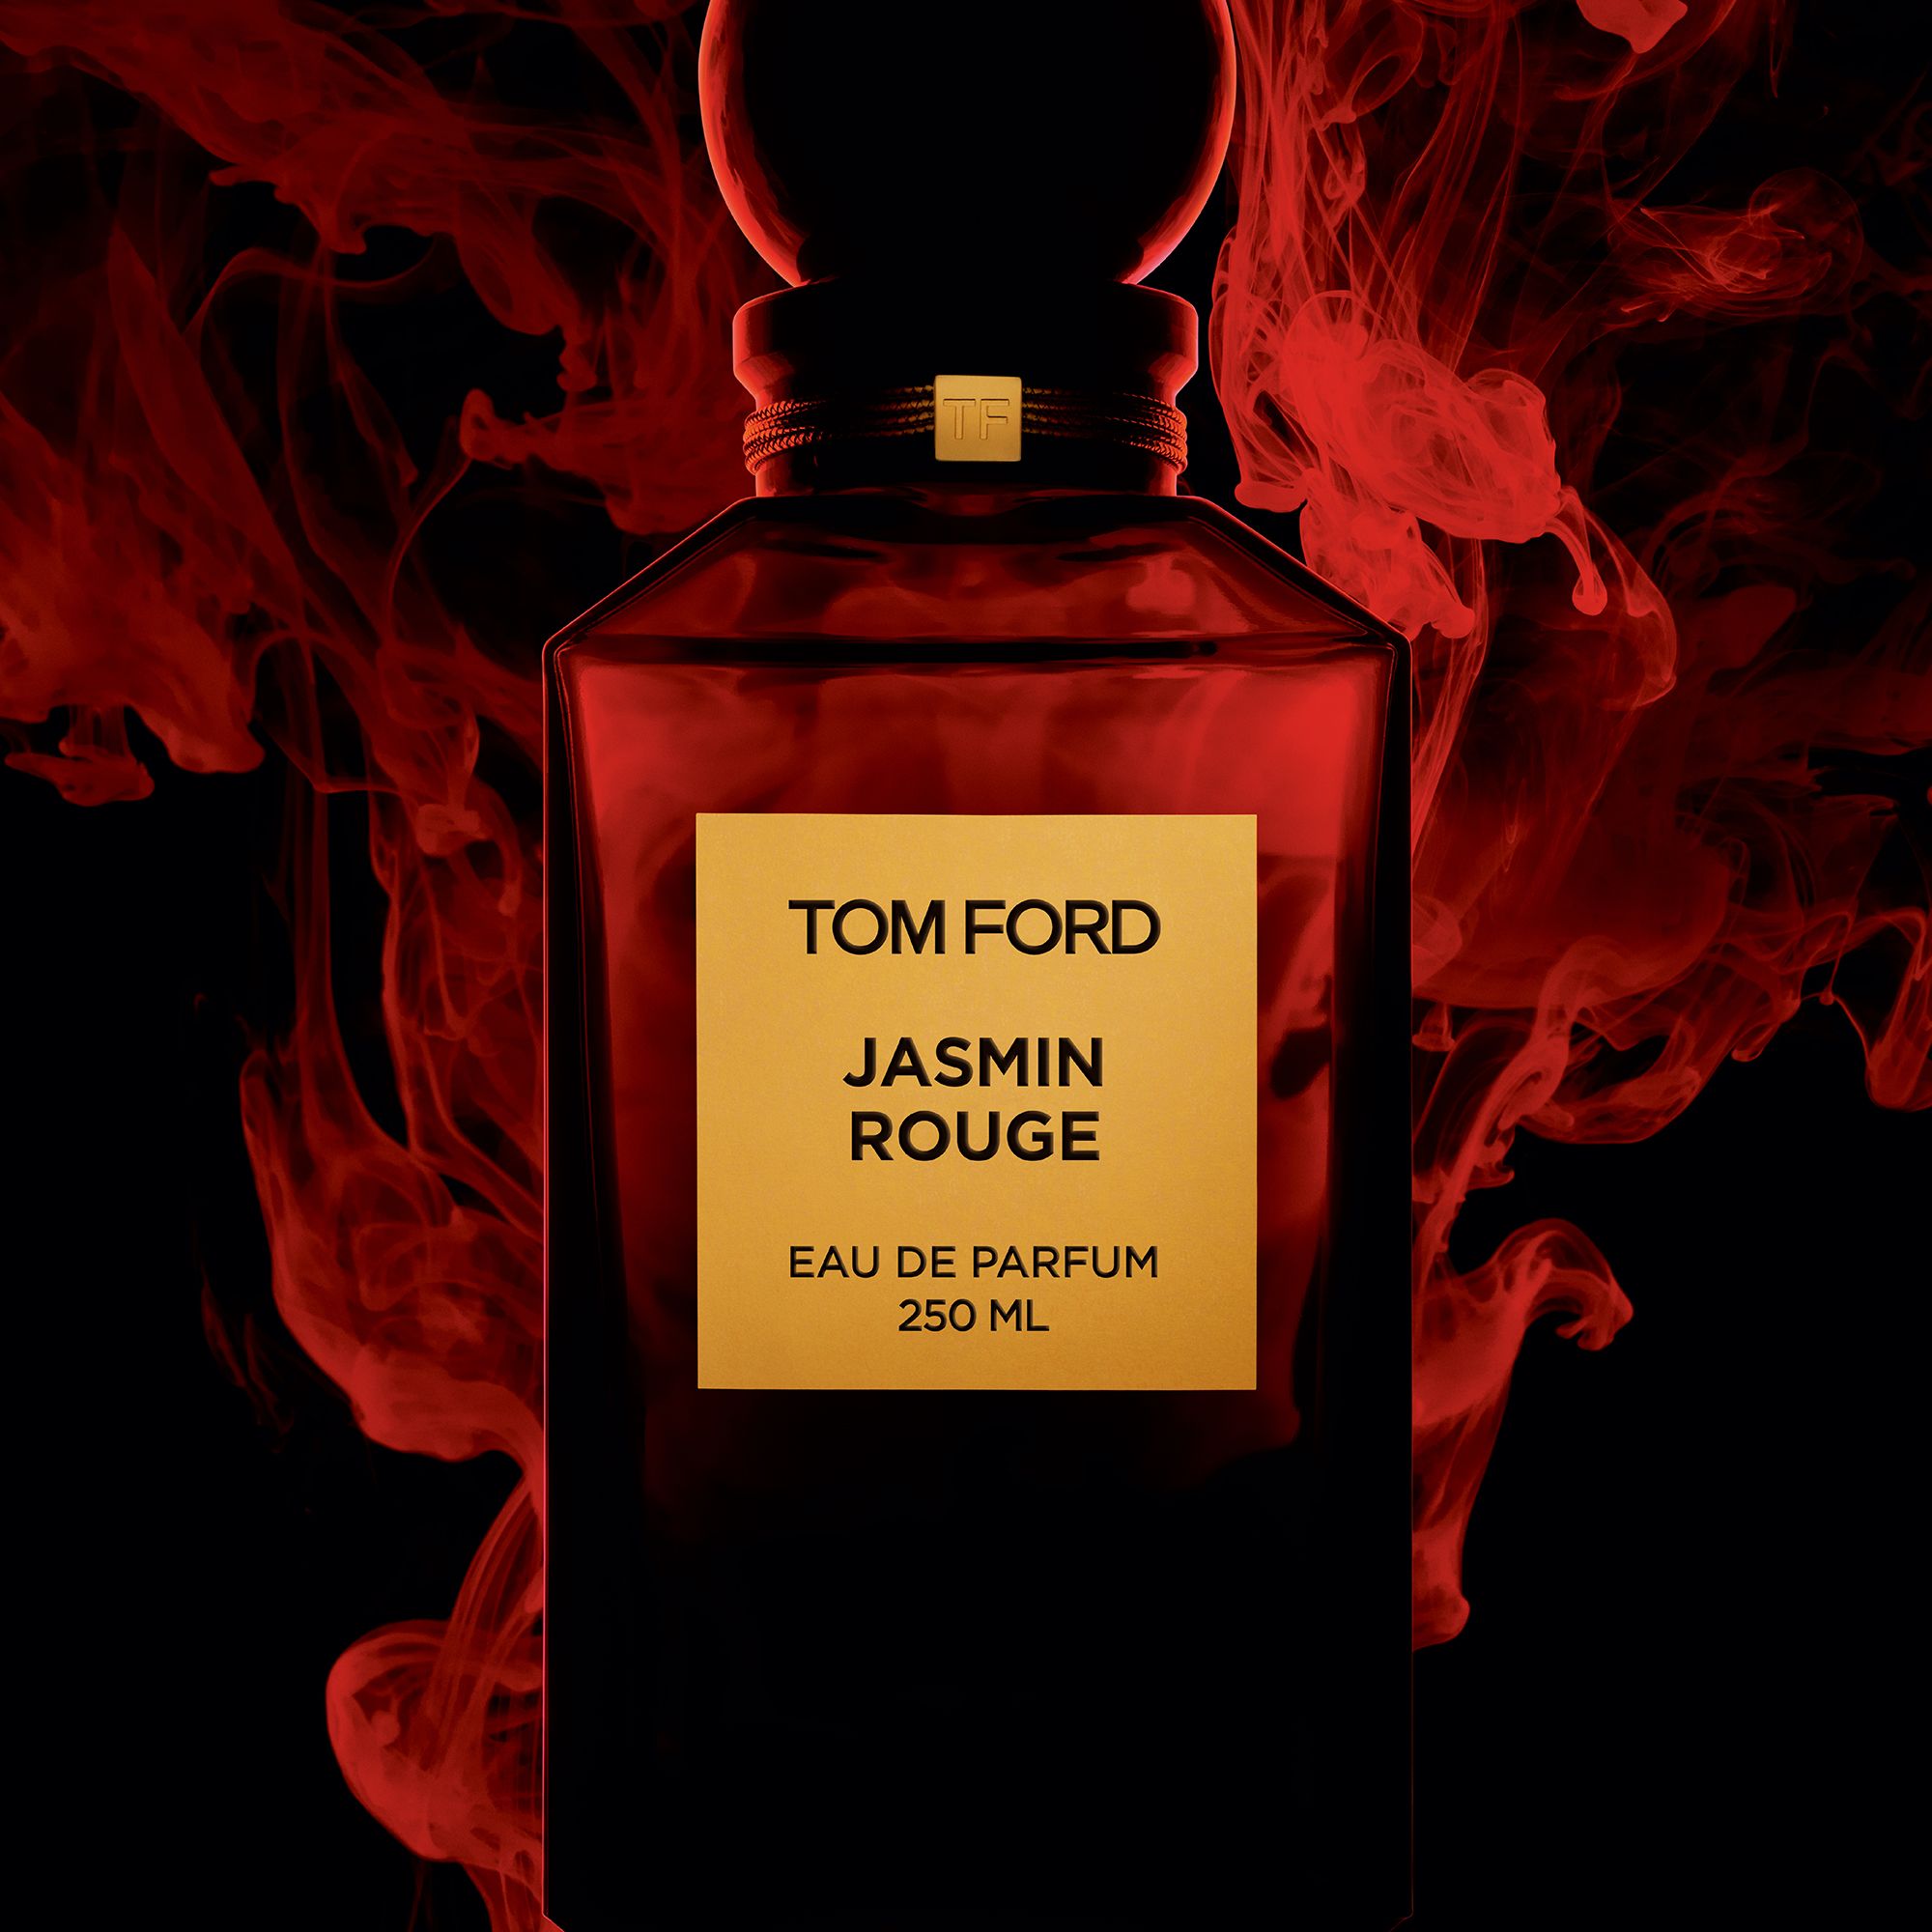 tom ford perfume jasmin rouge